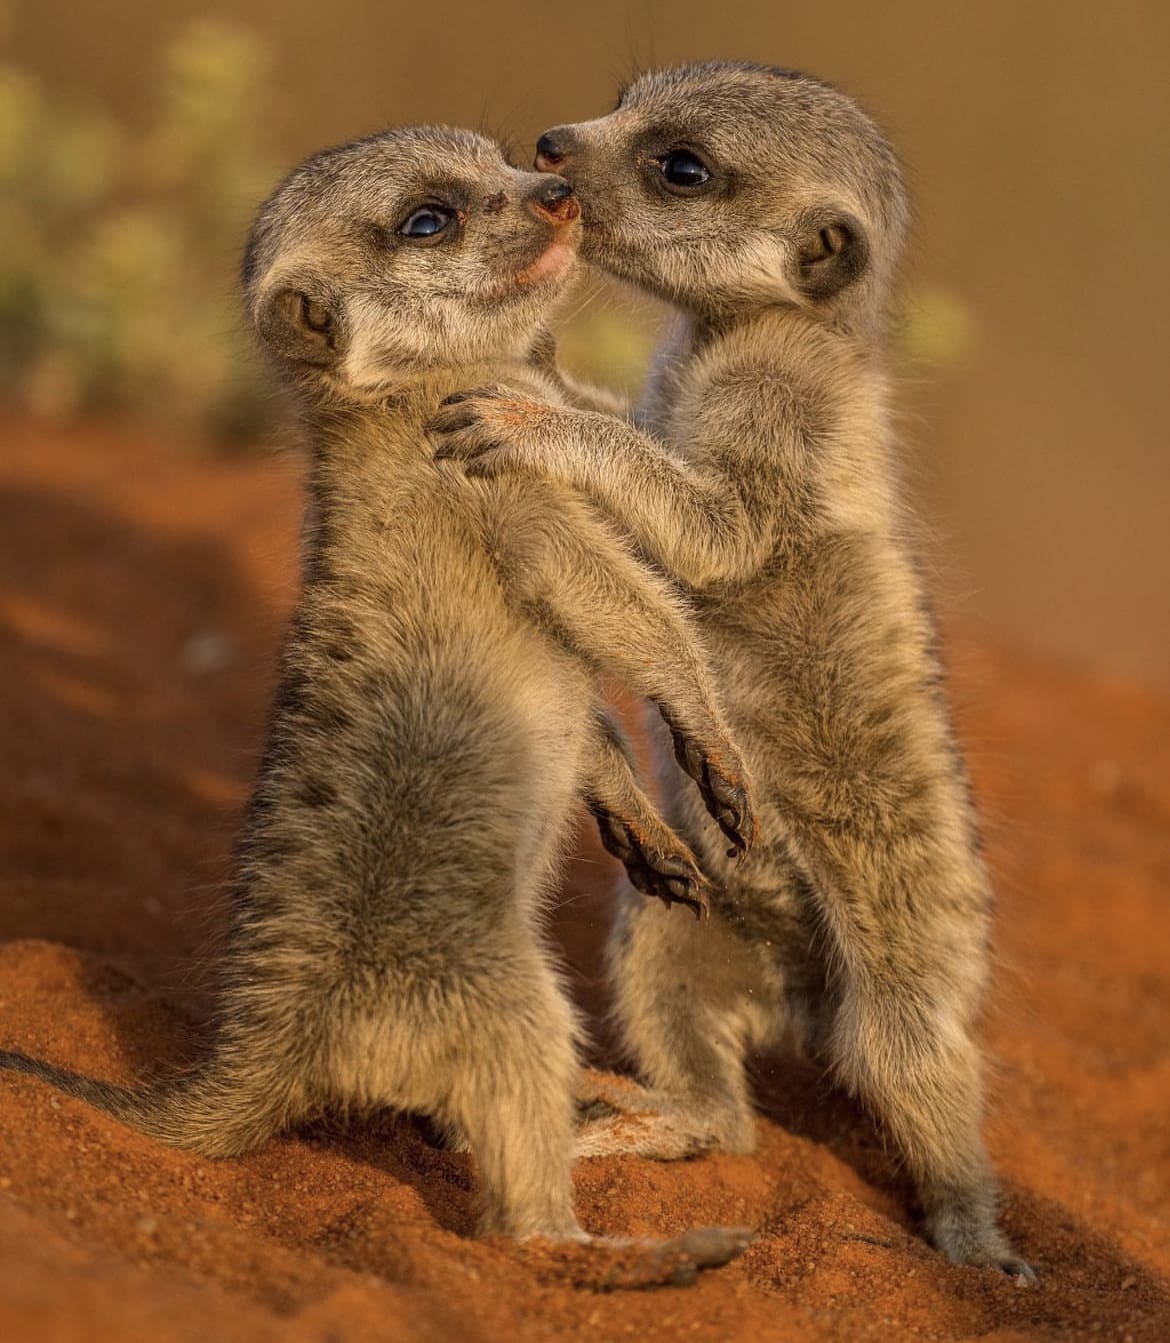 A pair of baby meerkats playing in the Kalahari sand